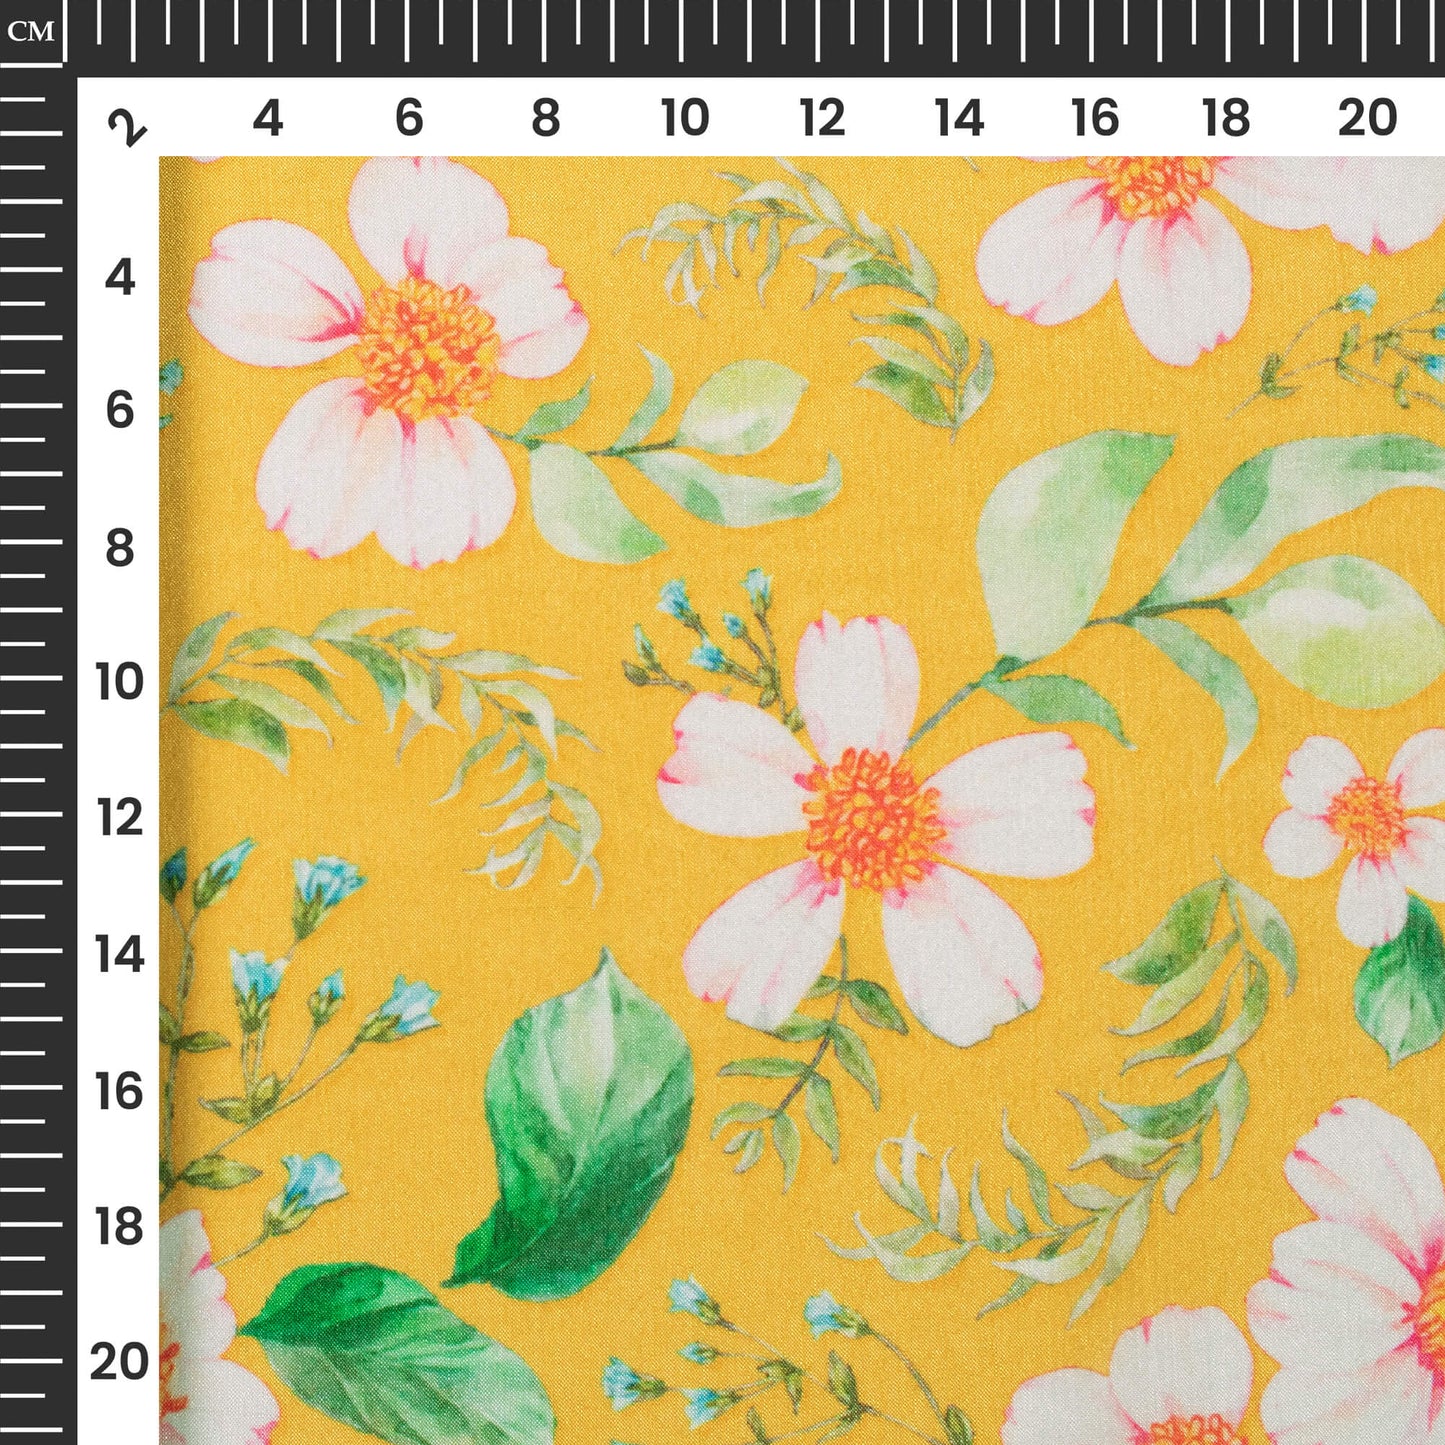 Vintage Floral Digital Print Poly Chinnon Chiffon Fabric